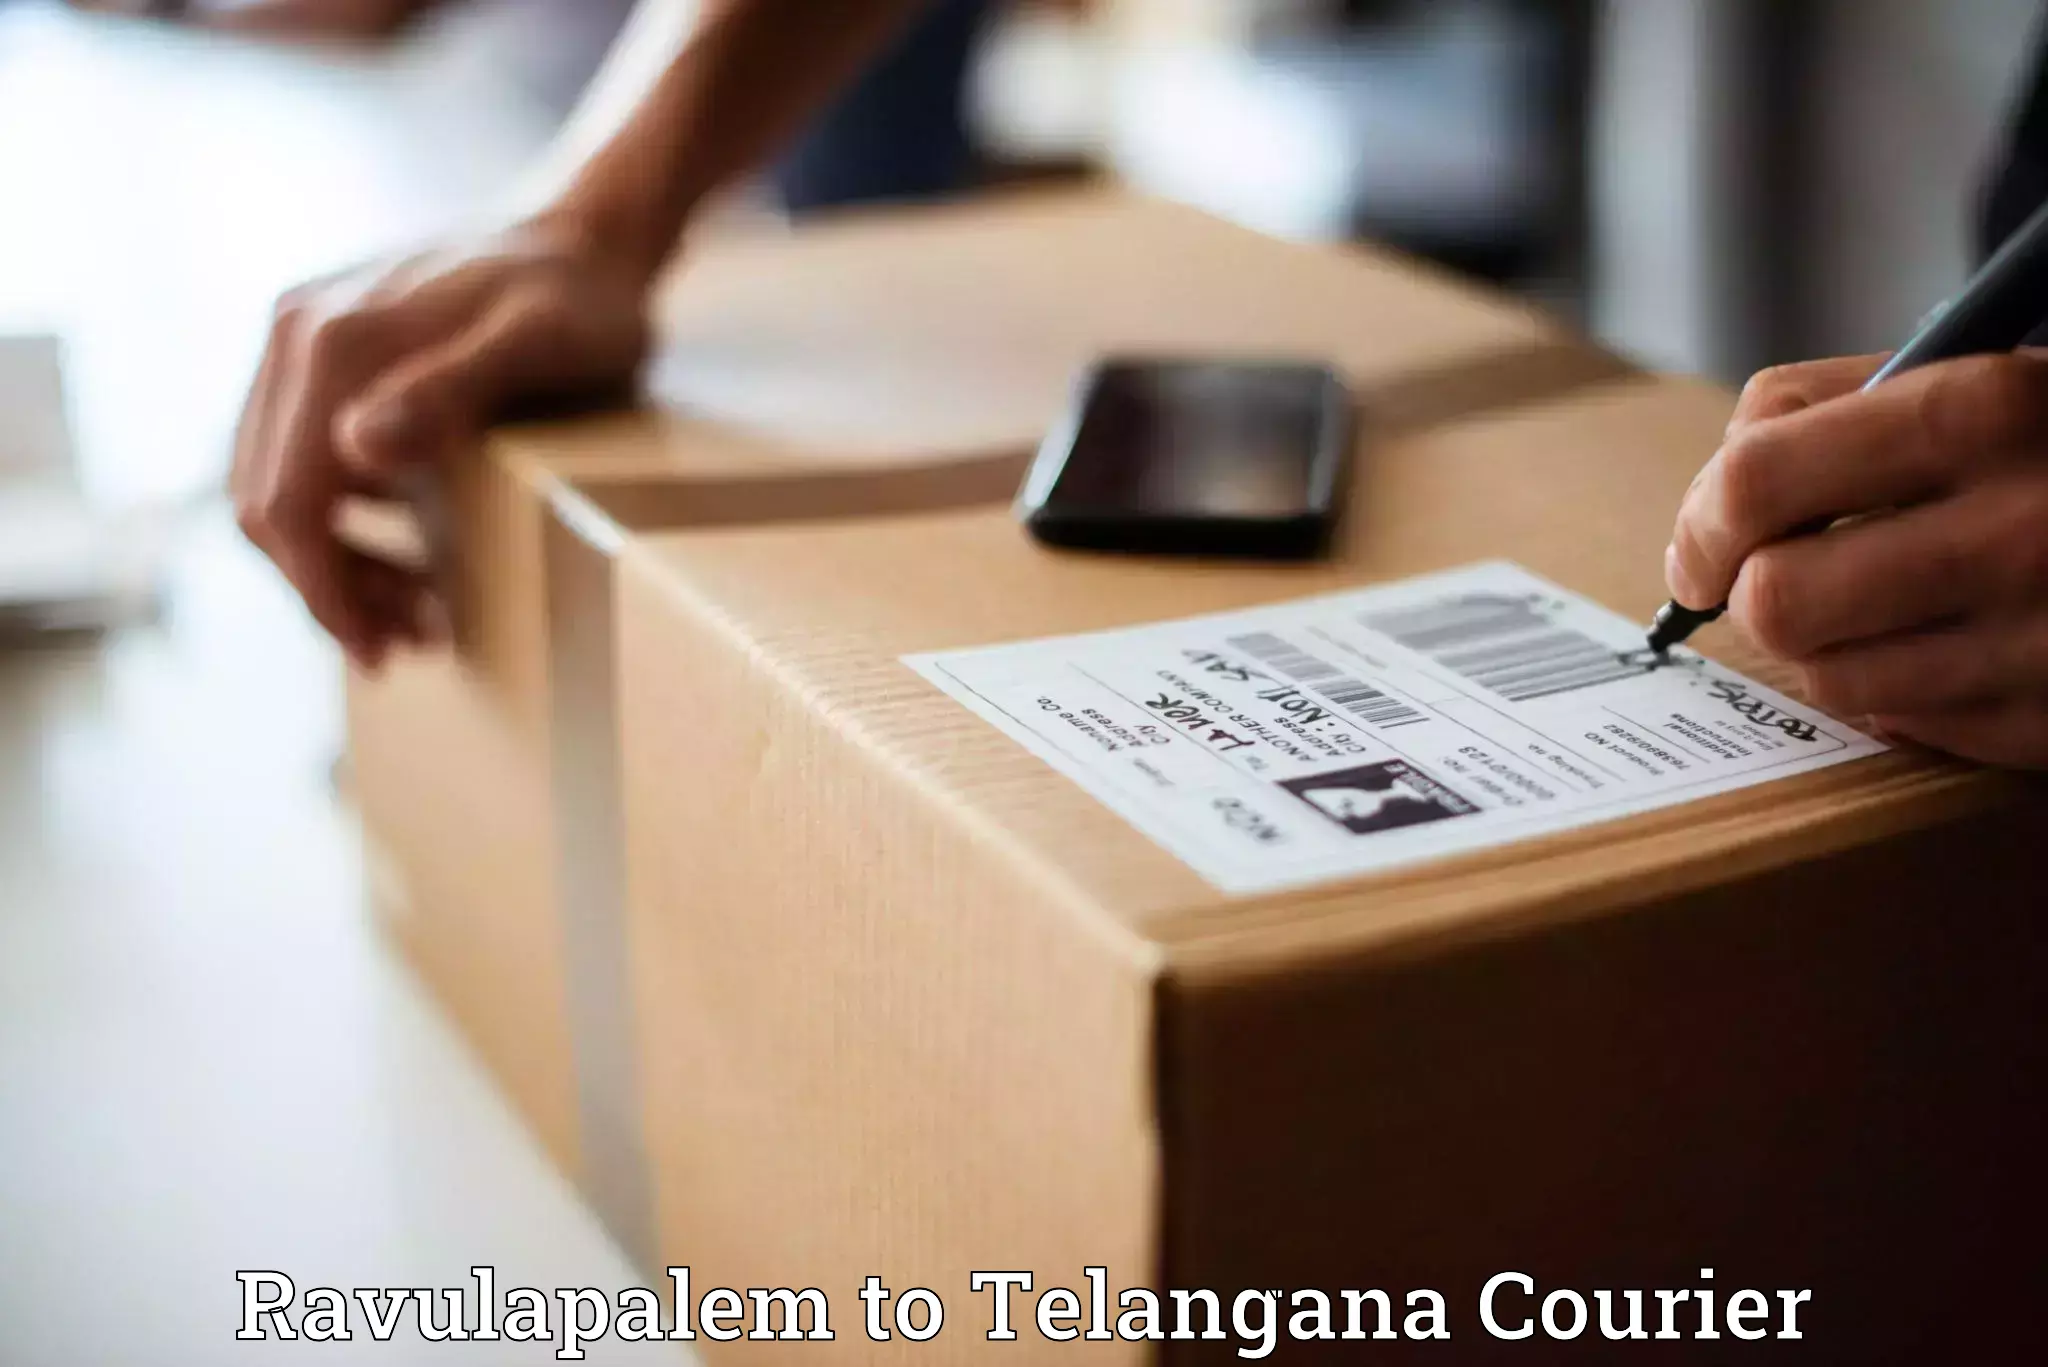 Optimized delivery routes Ravulapalem to Telangana